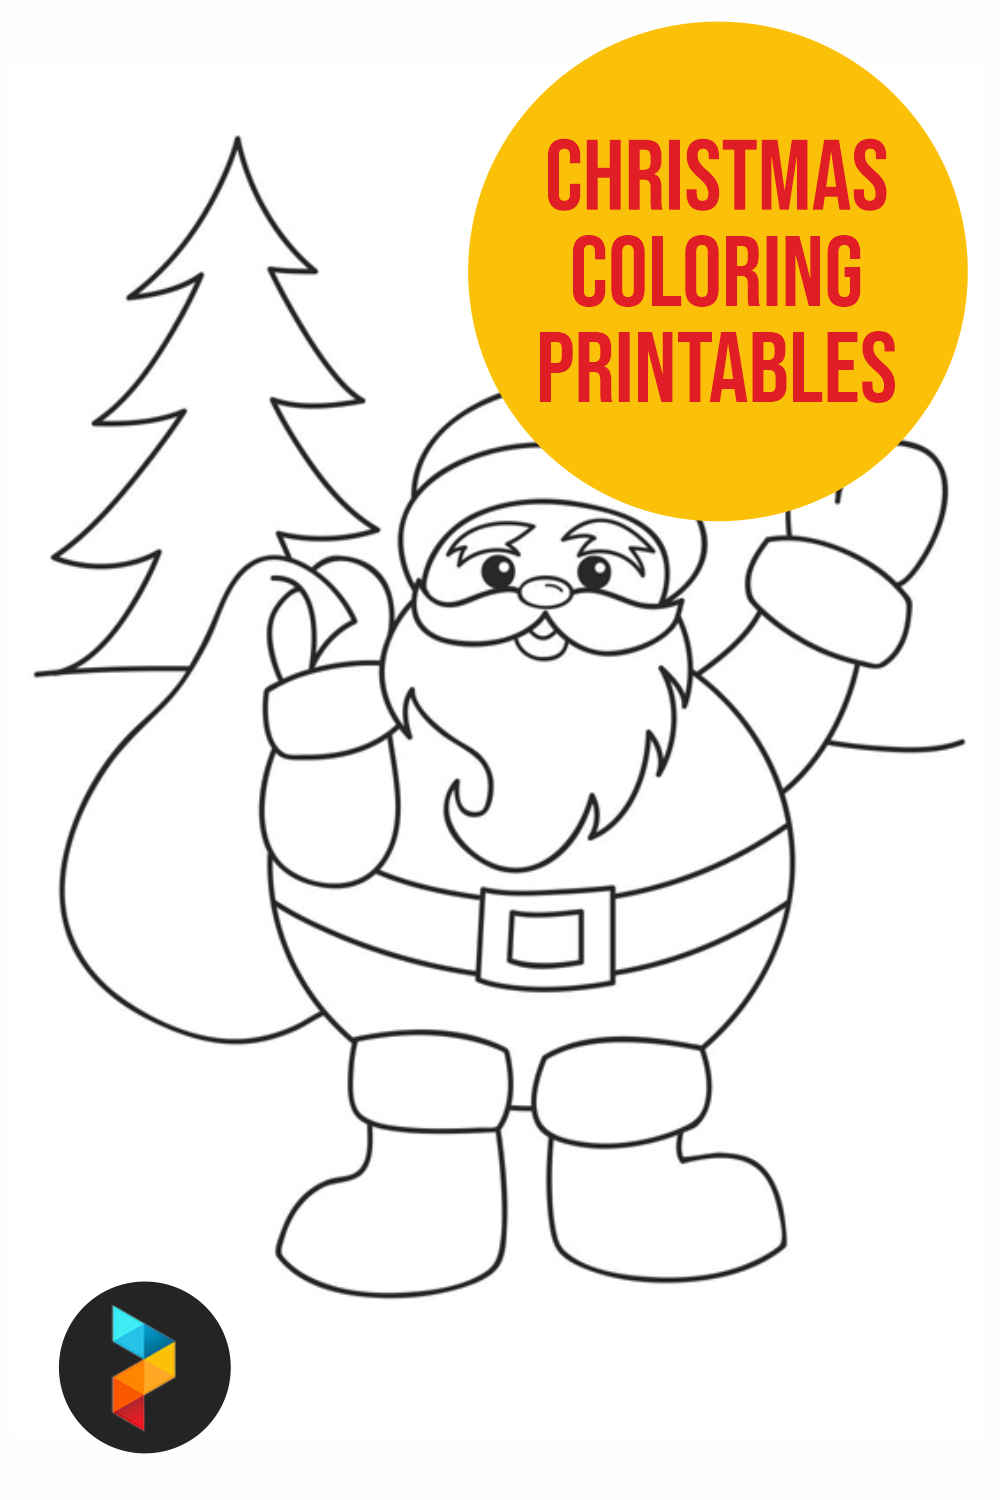 Christmas Coloring Printables